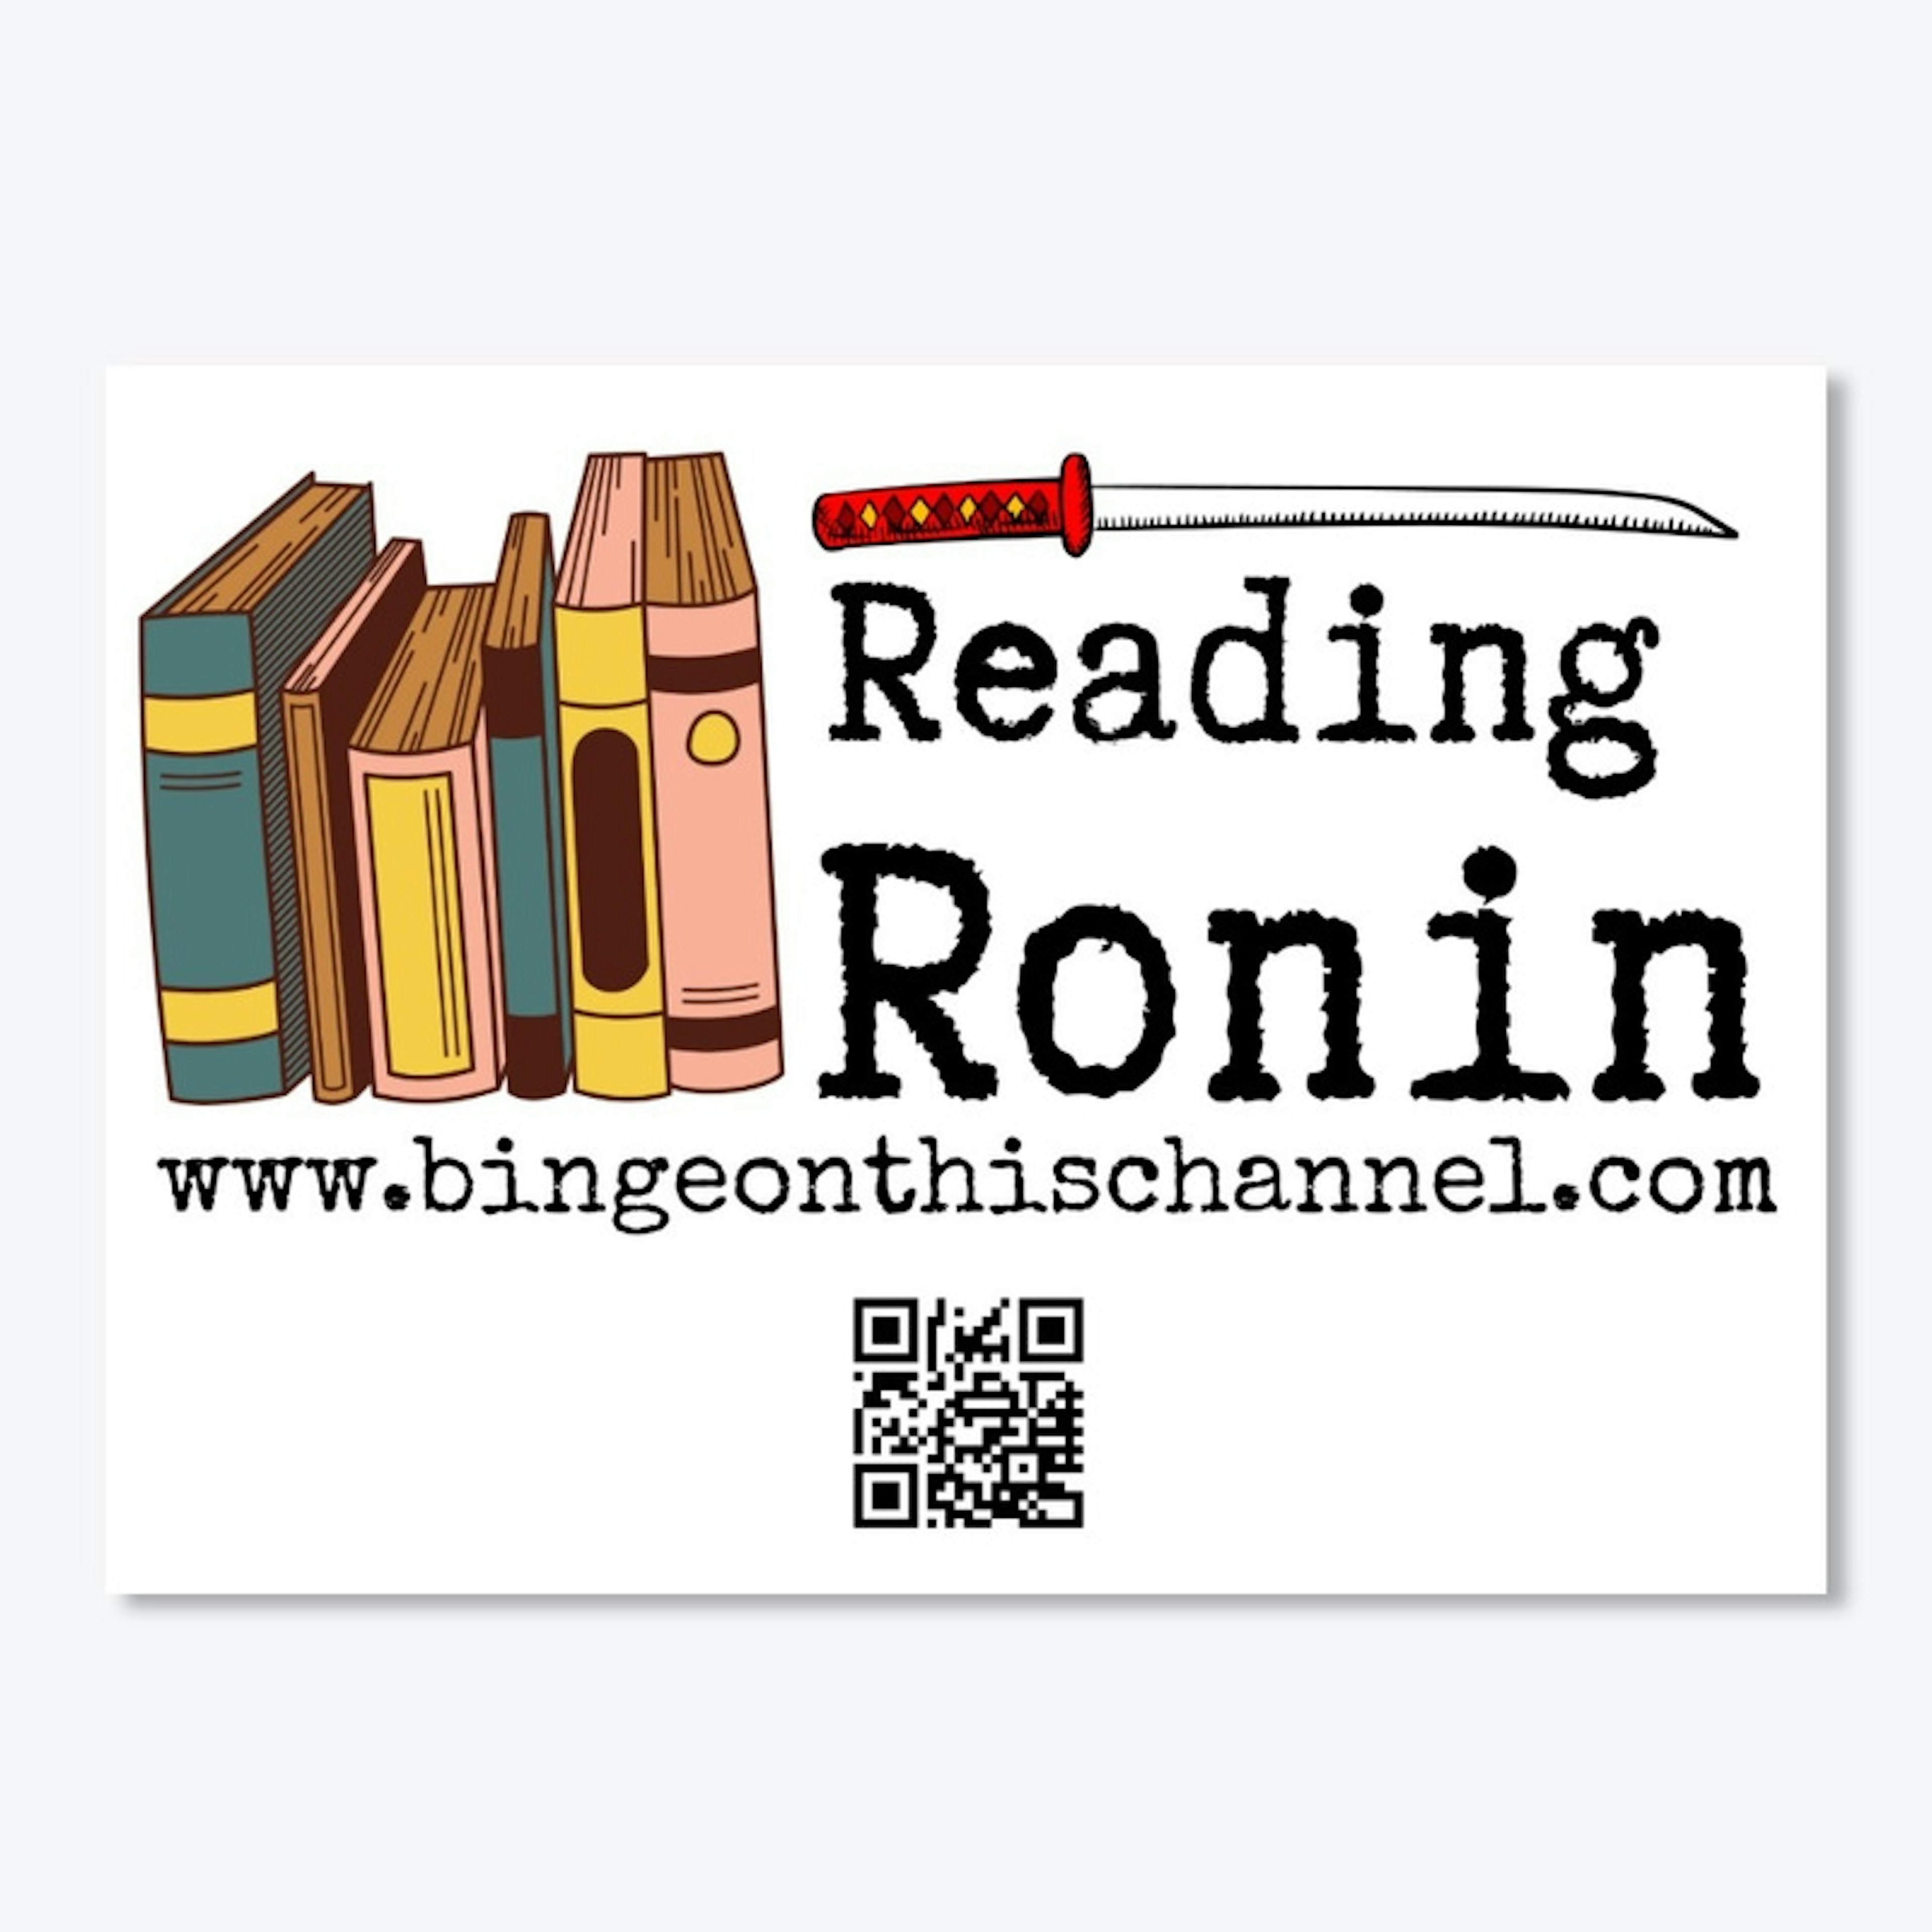 Reading Ronin book sword logo